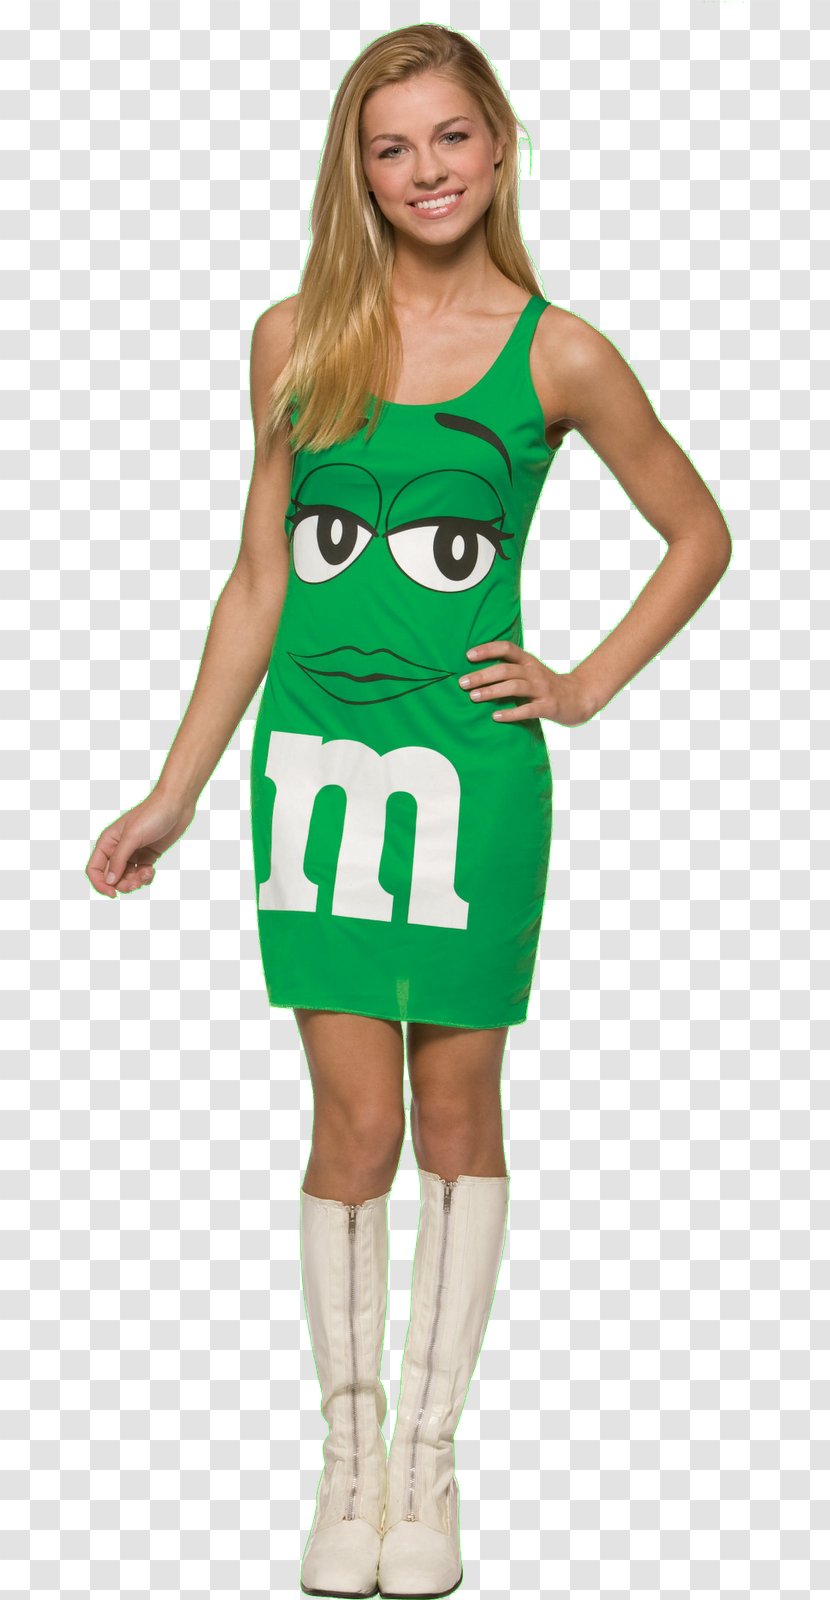 M&M's Halloween Costume Party Clothing - Cheerleading Uniform - Dress Transparent PNG